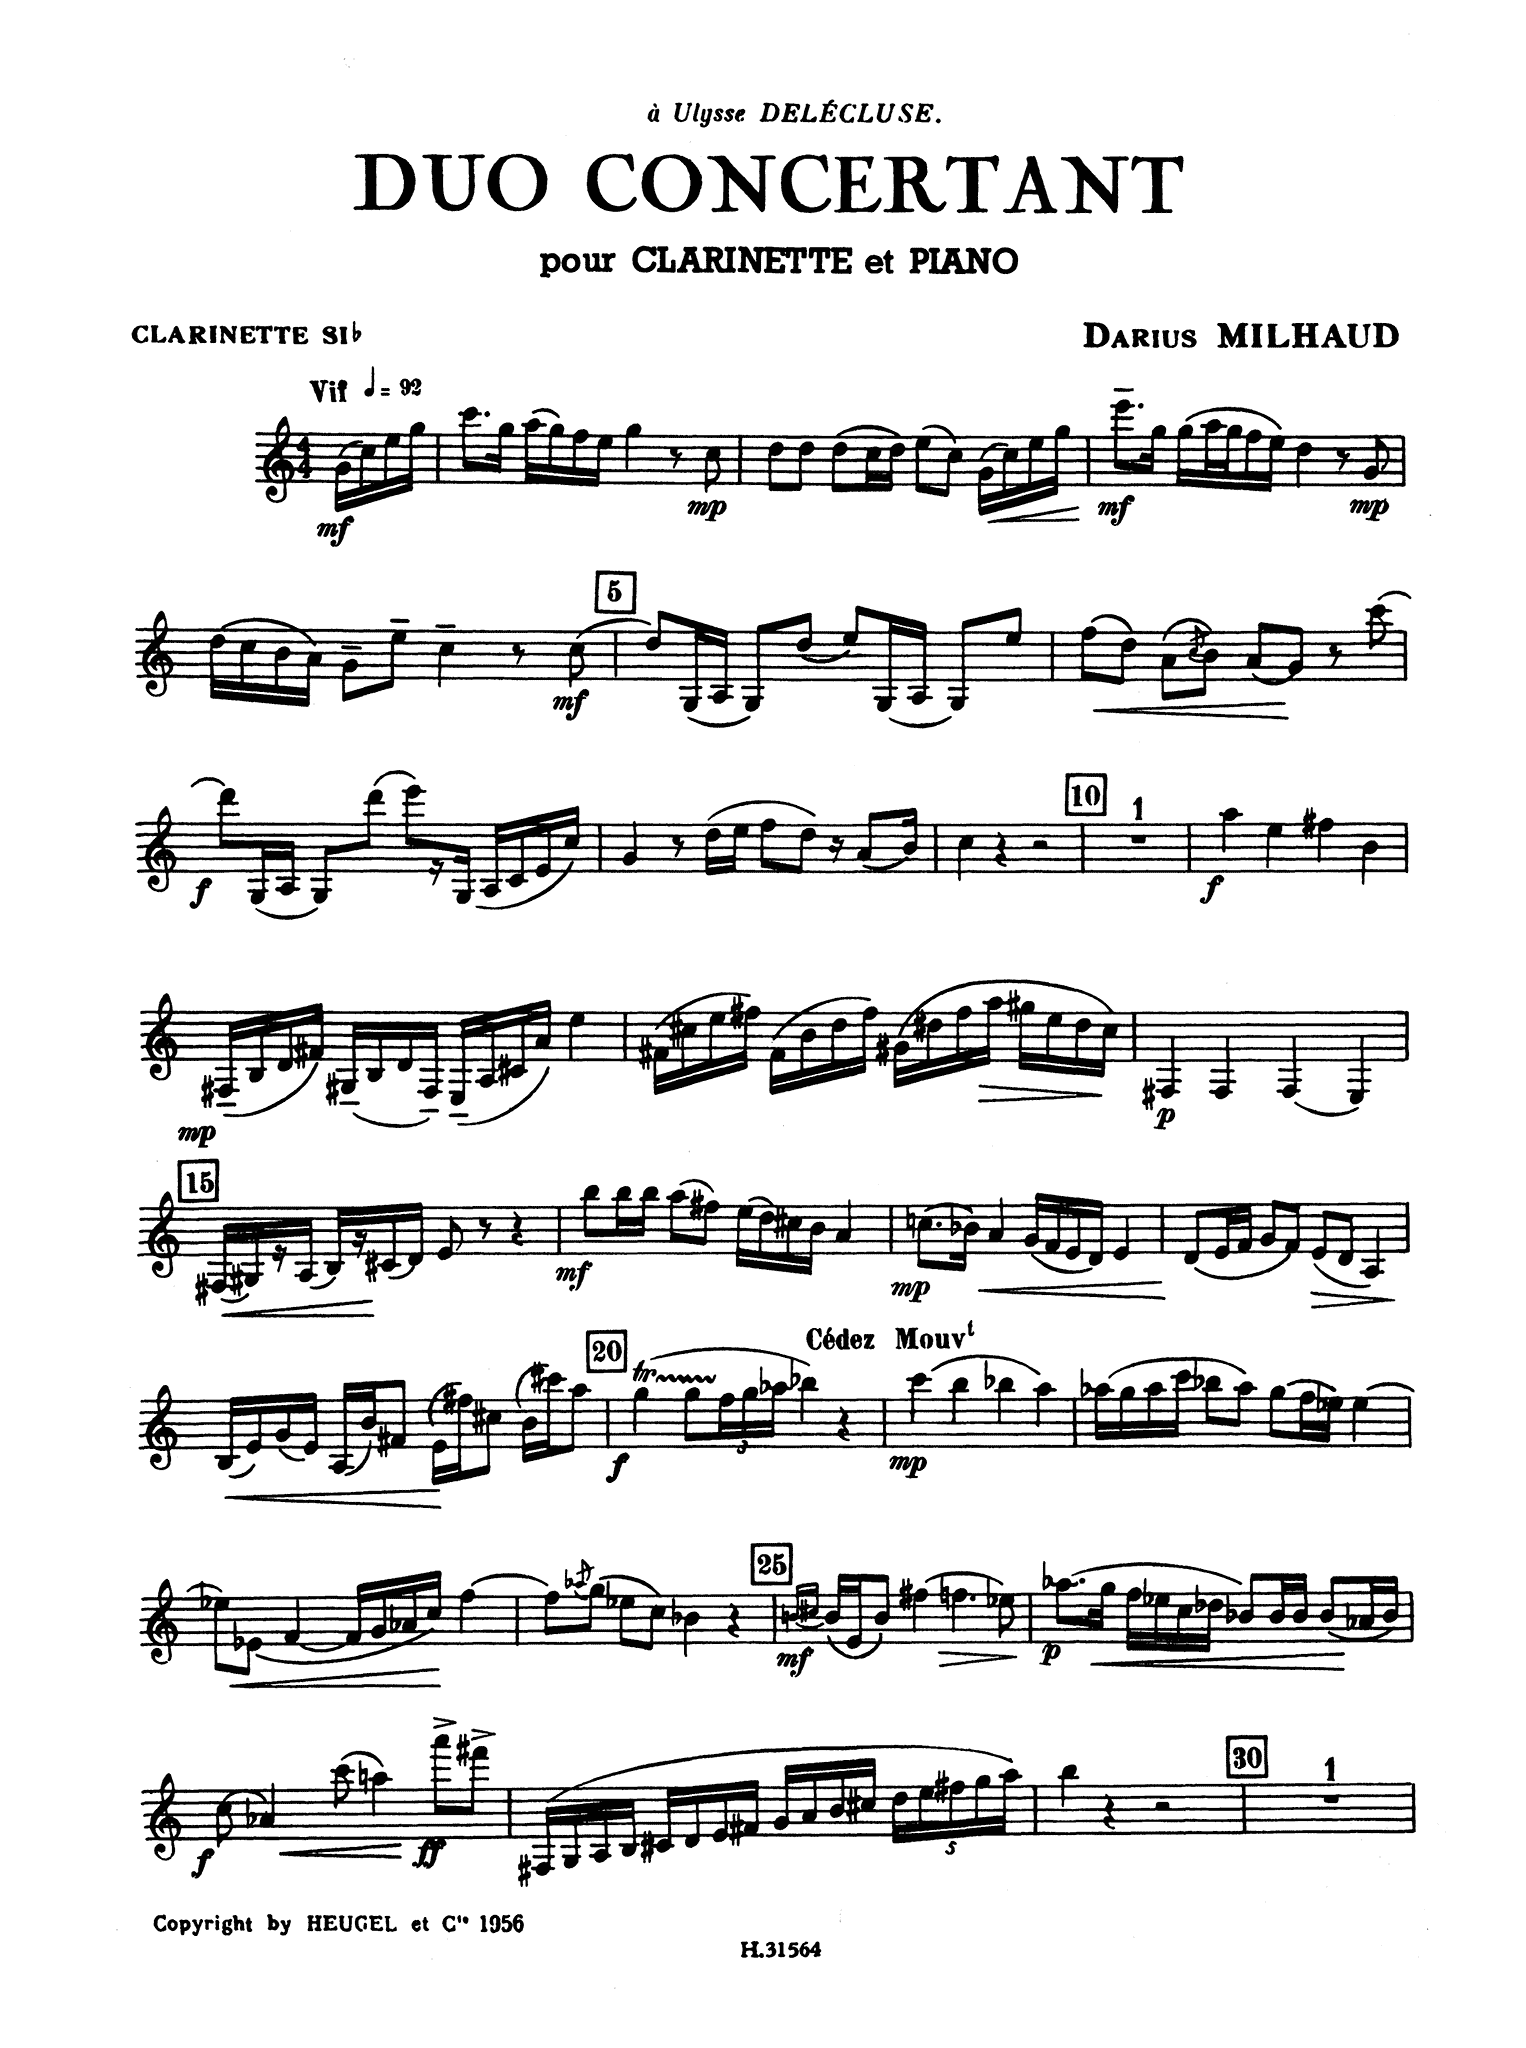 Milhaud Duo Concertant, Op. 351 clarinet part